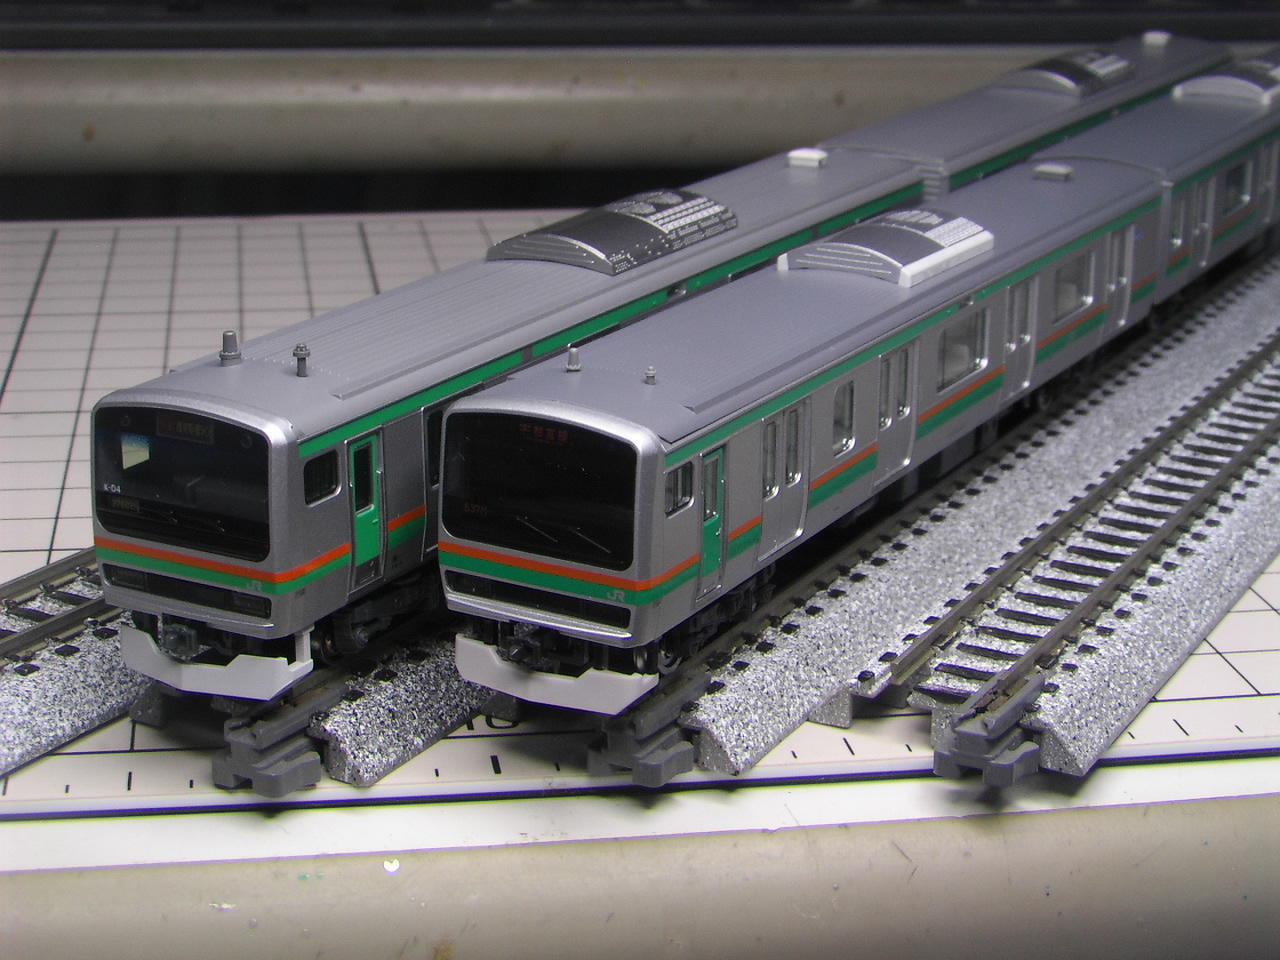 TOMIX E231-1000系近郊電車(東北・高崎線)15両セット Nゲージ - 鉄道模型